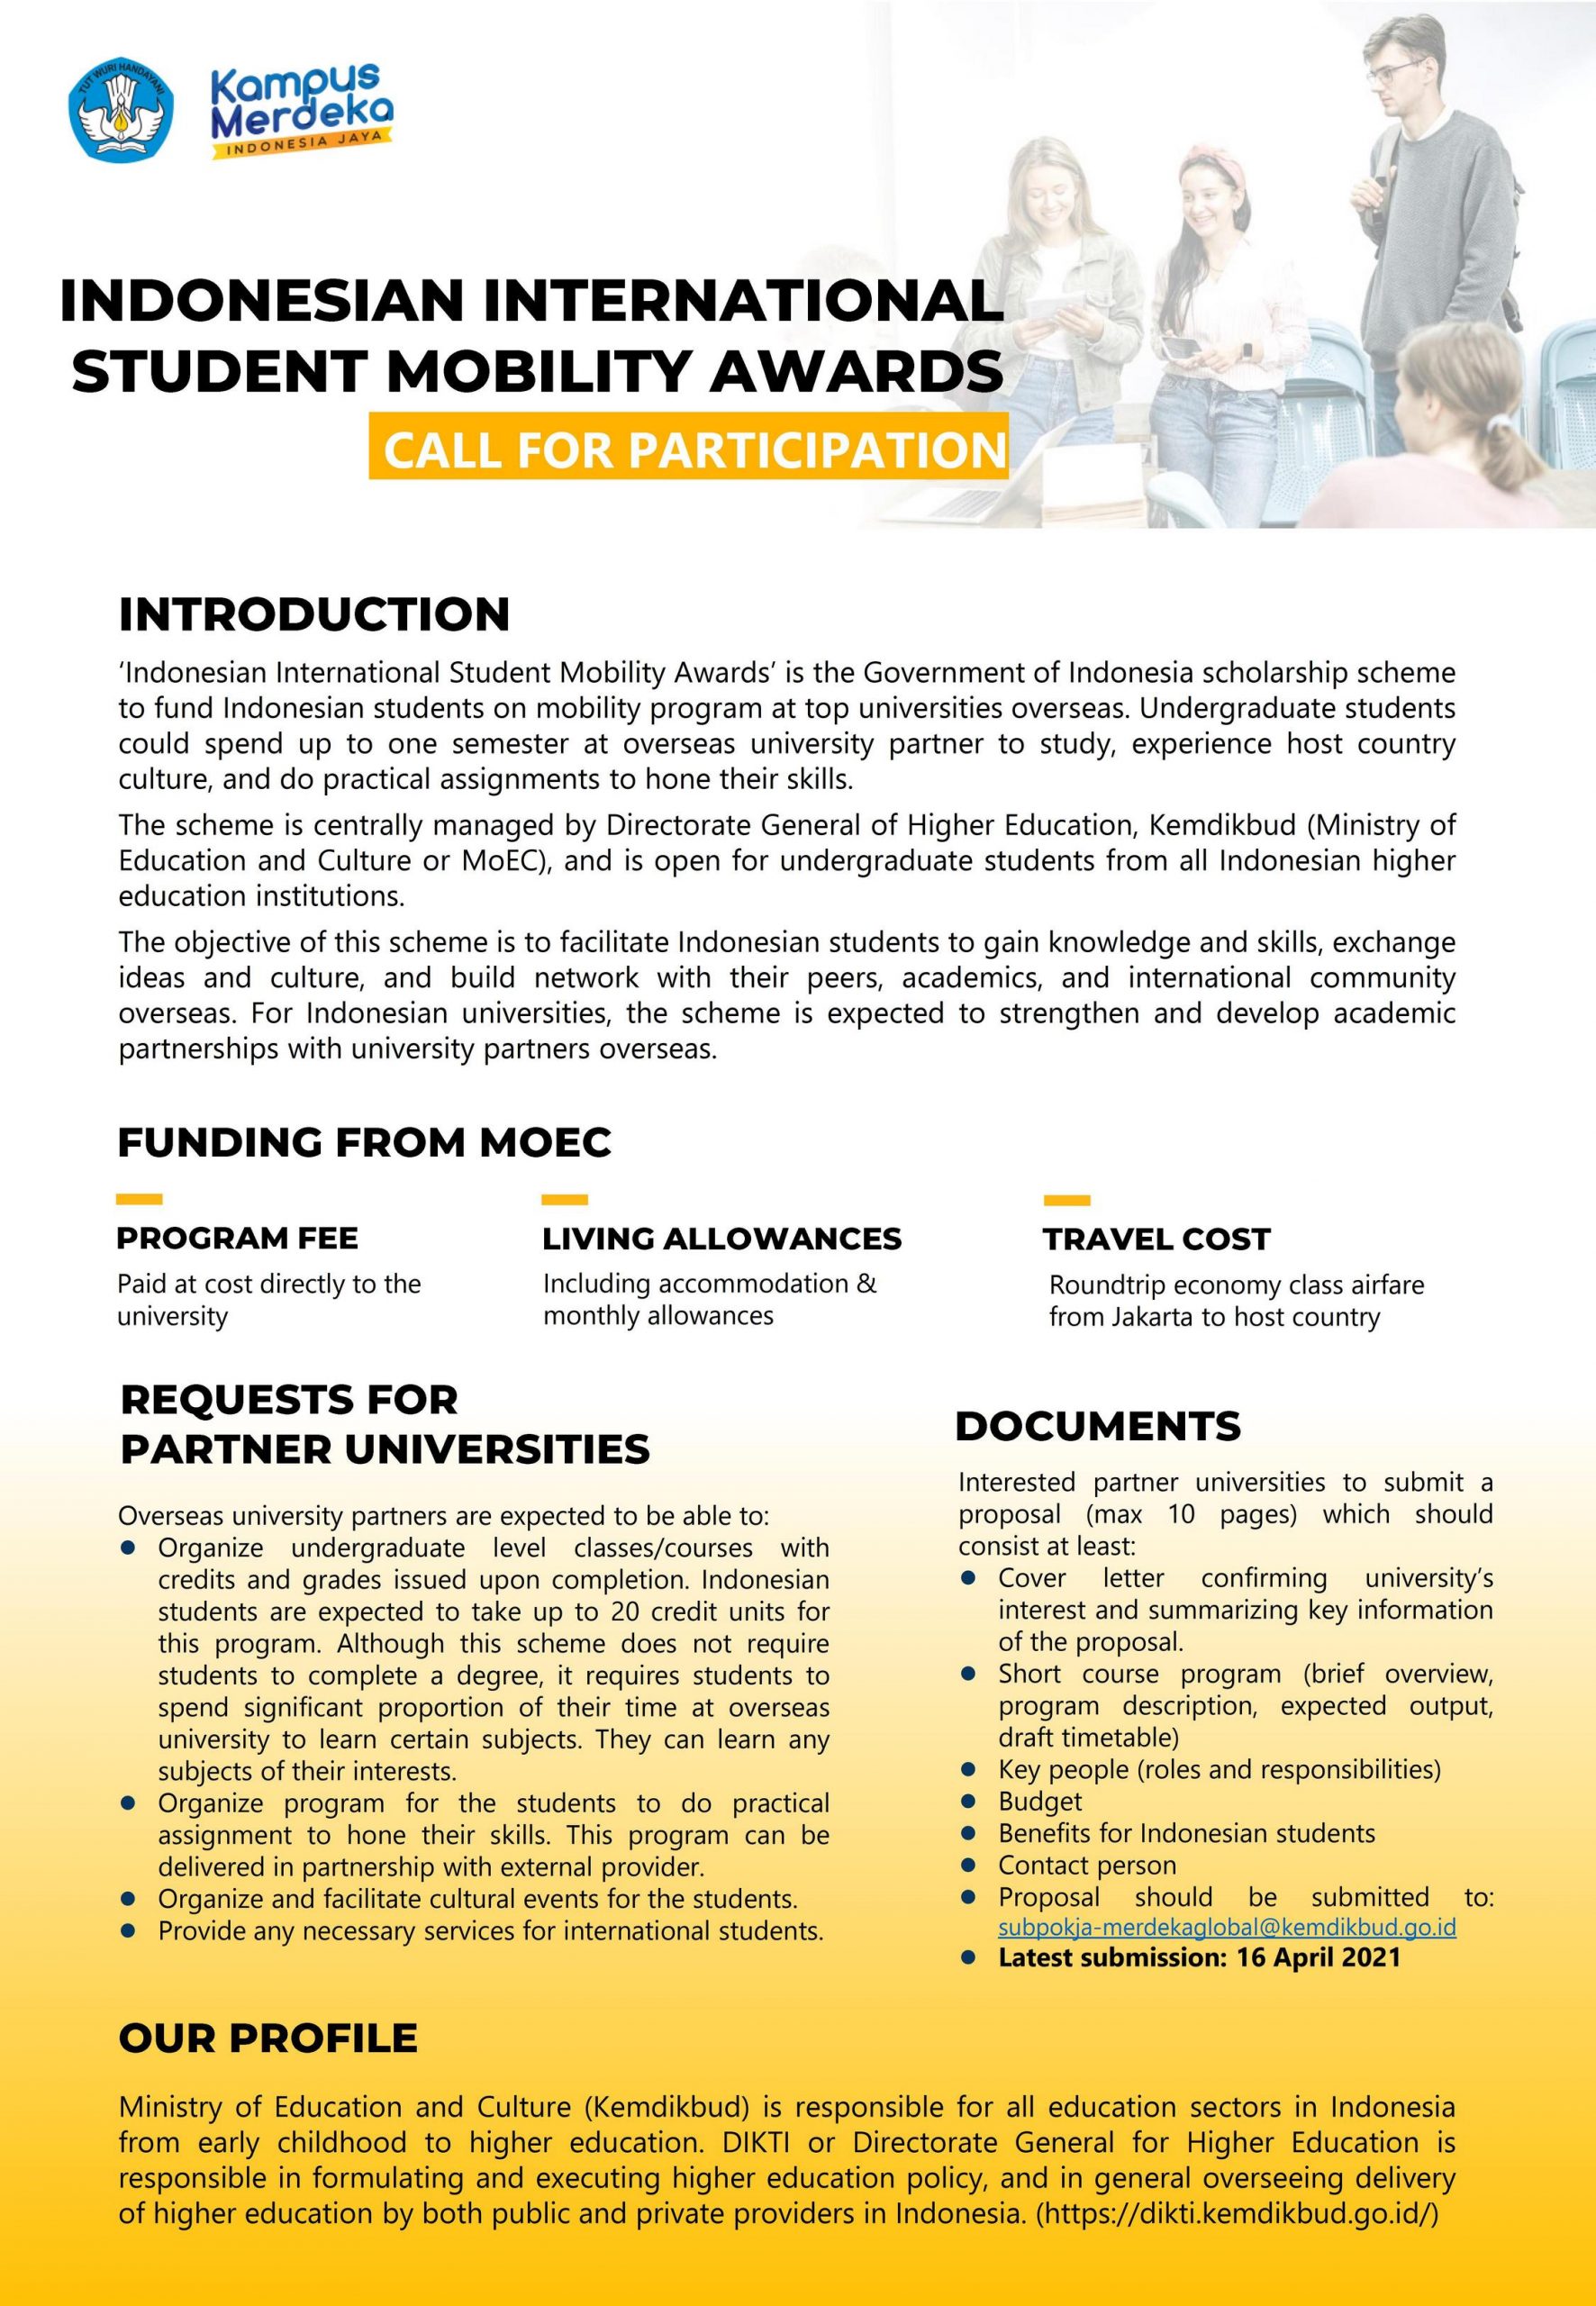 Indonesia International Student Mobility Award (IISMA) 2021